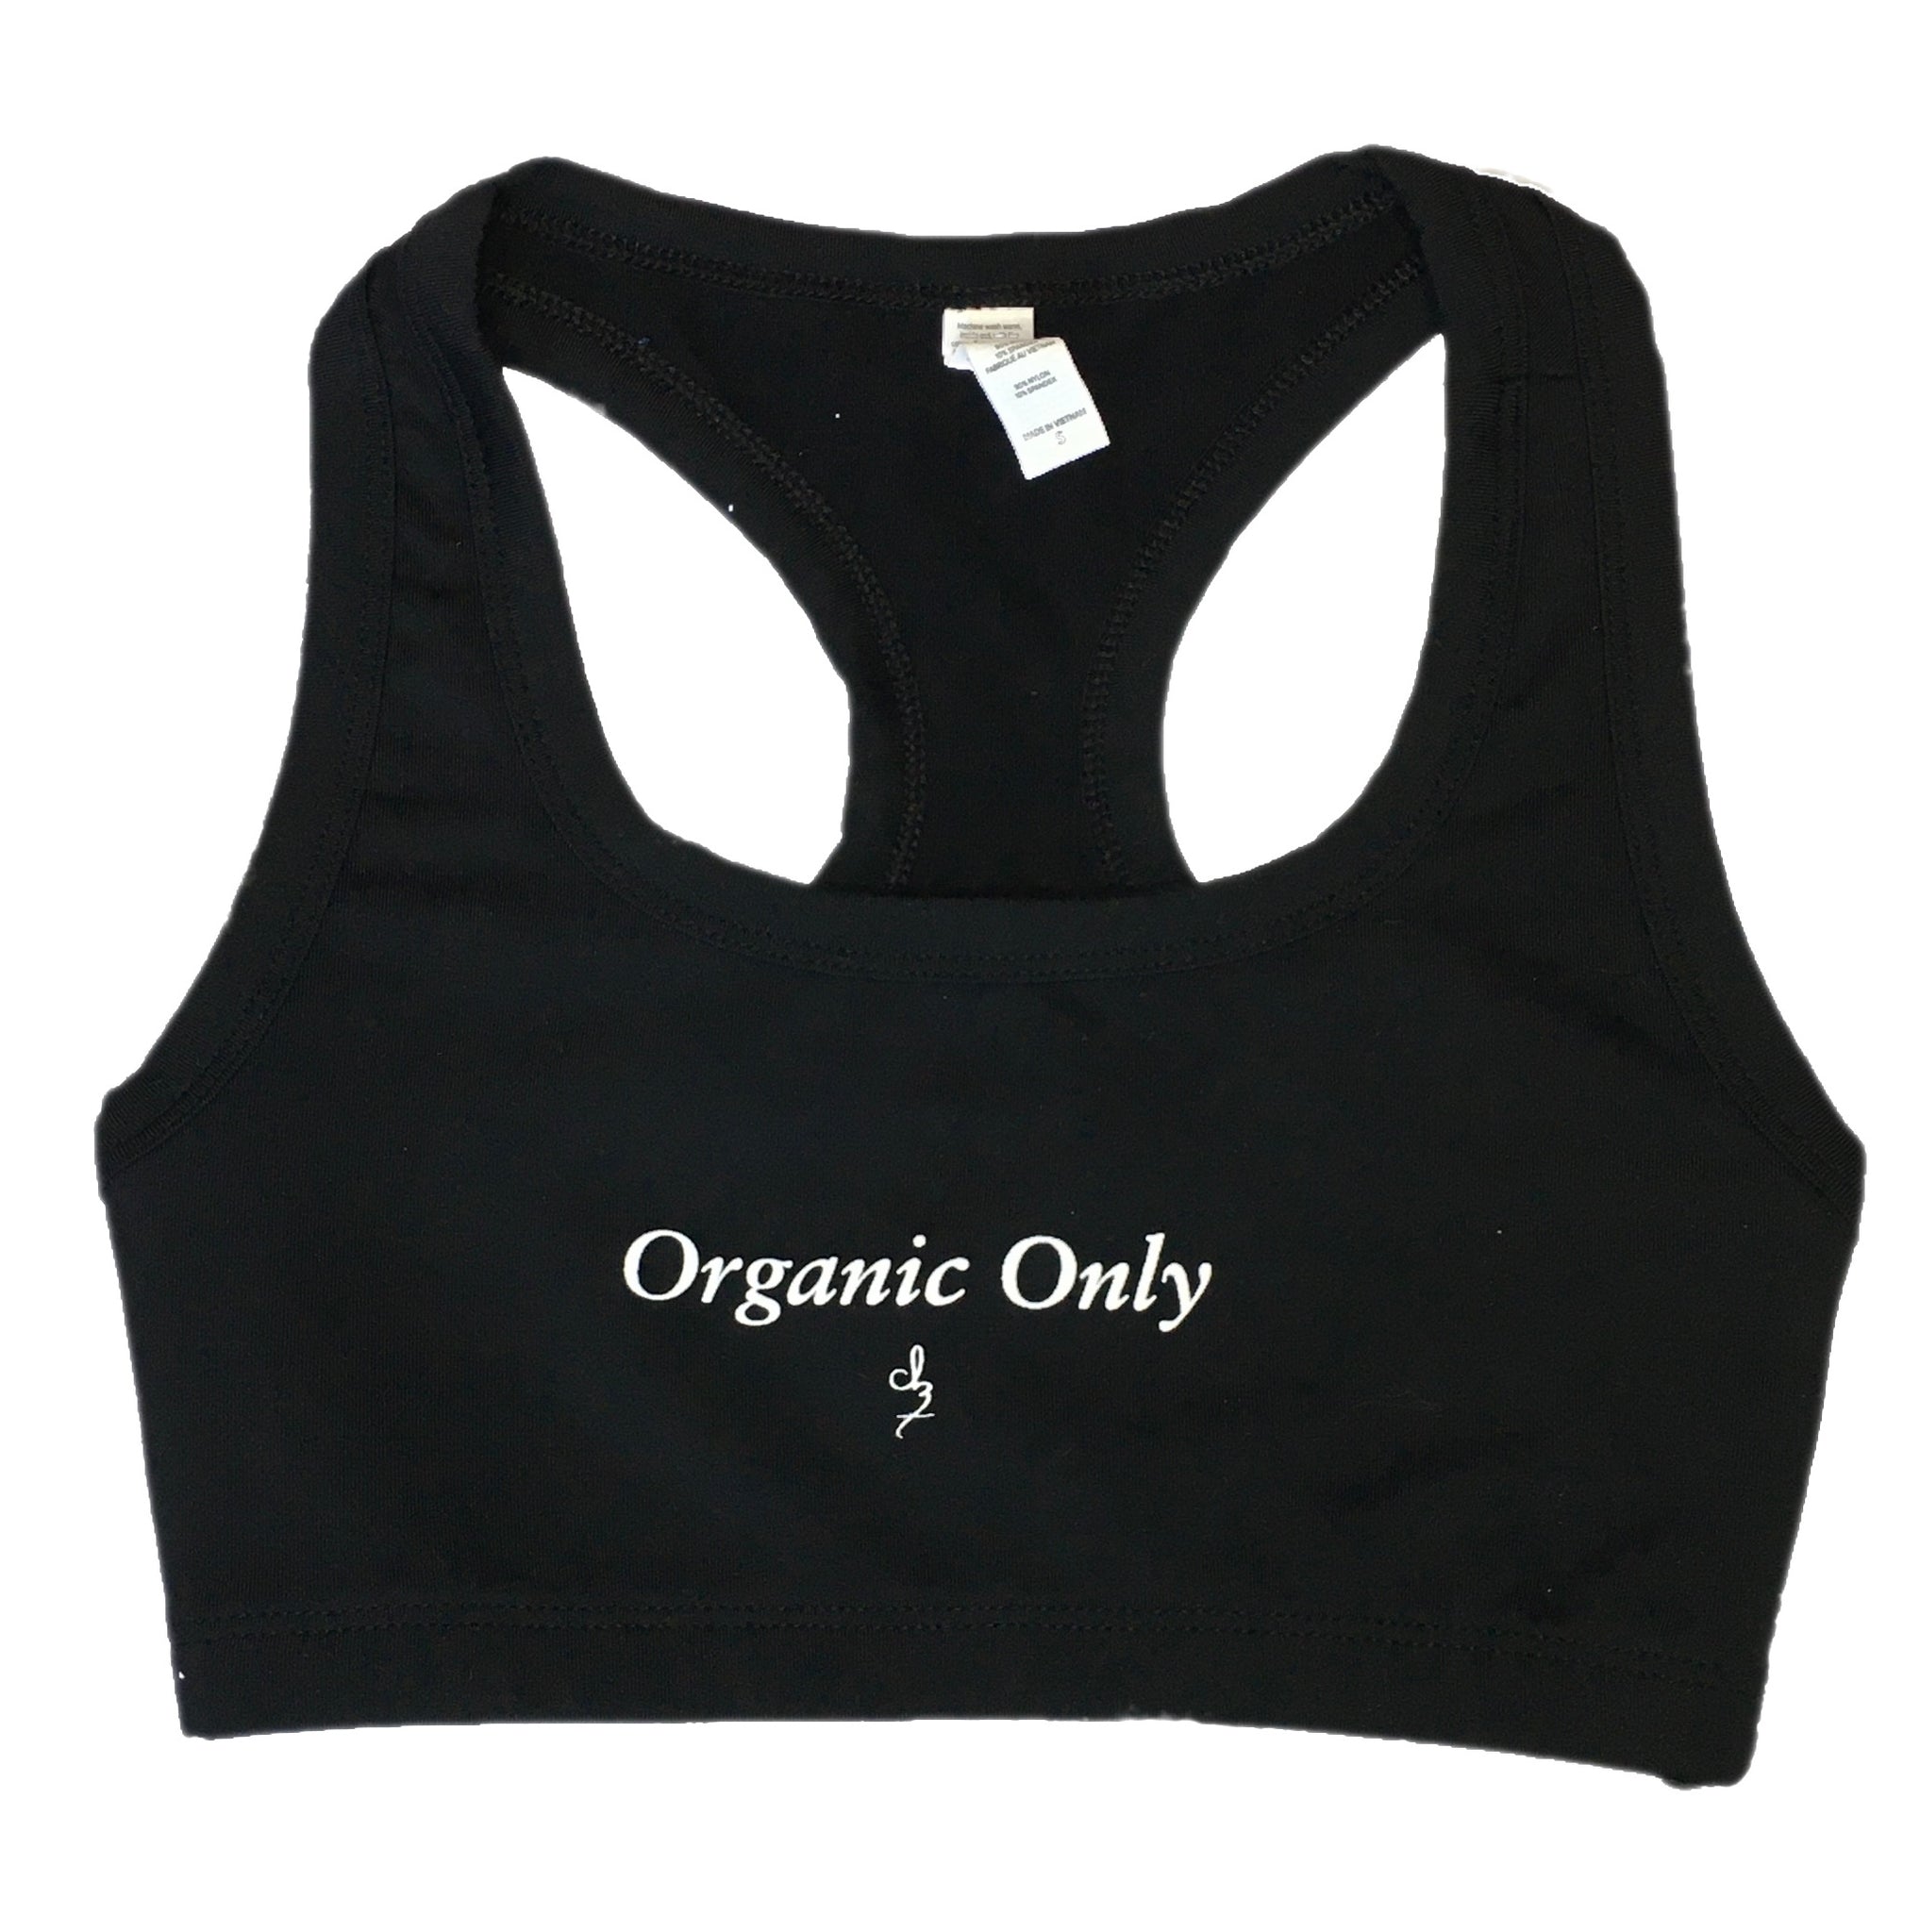 “Organic Only” Sports Bra